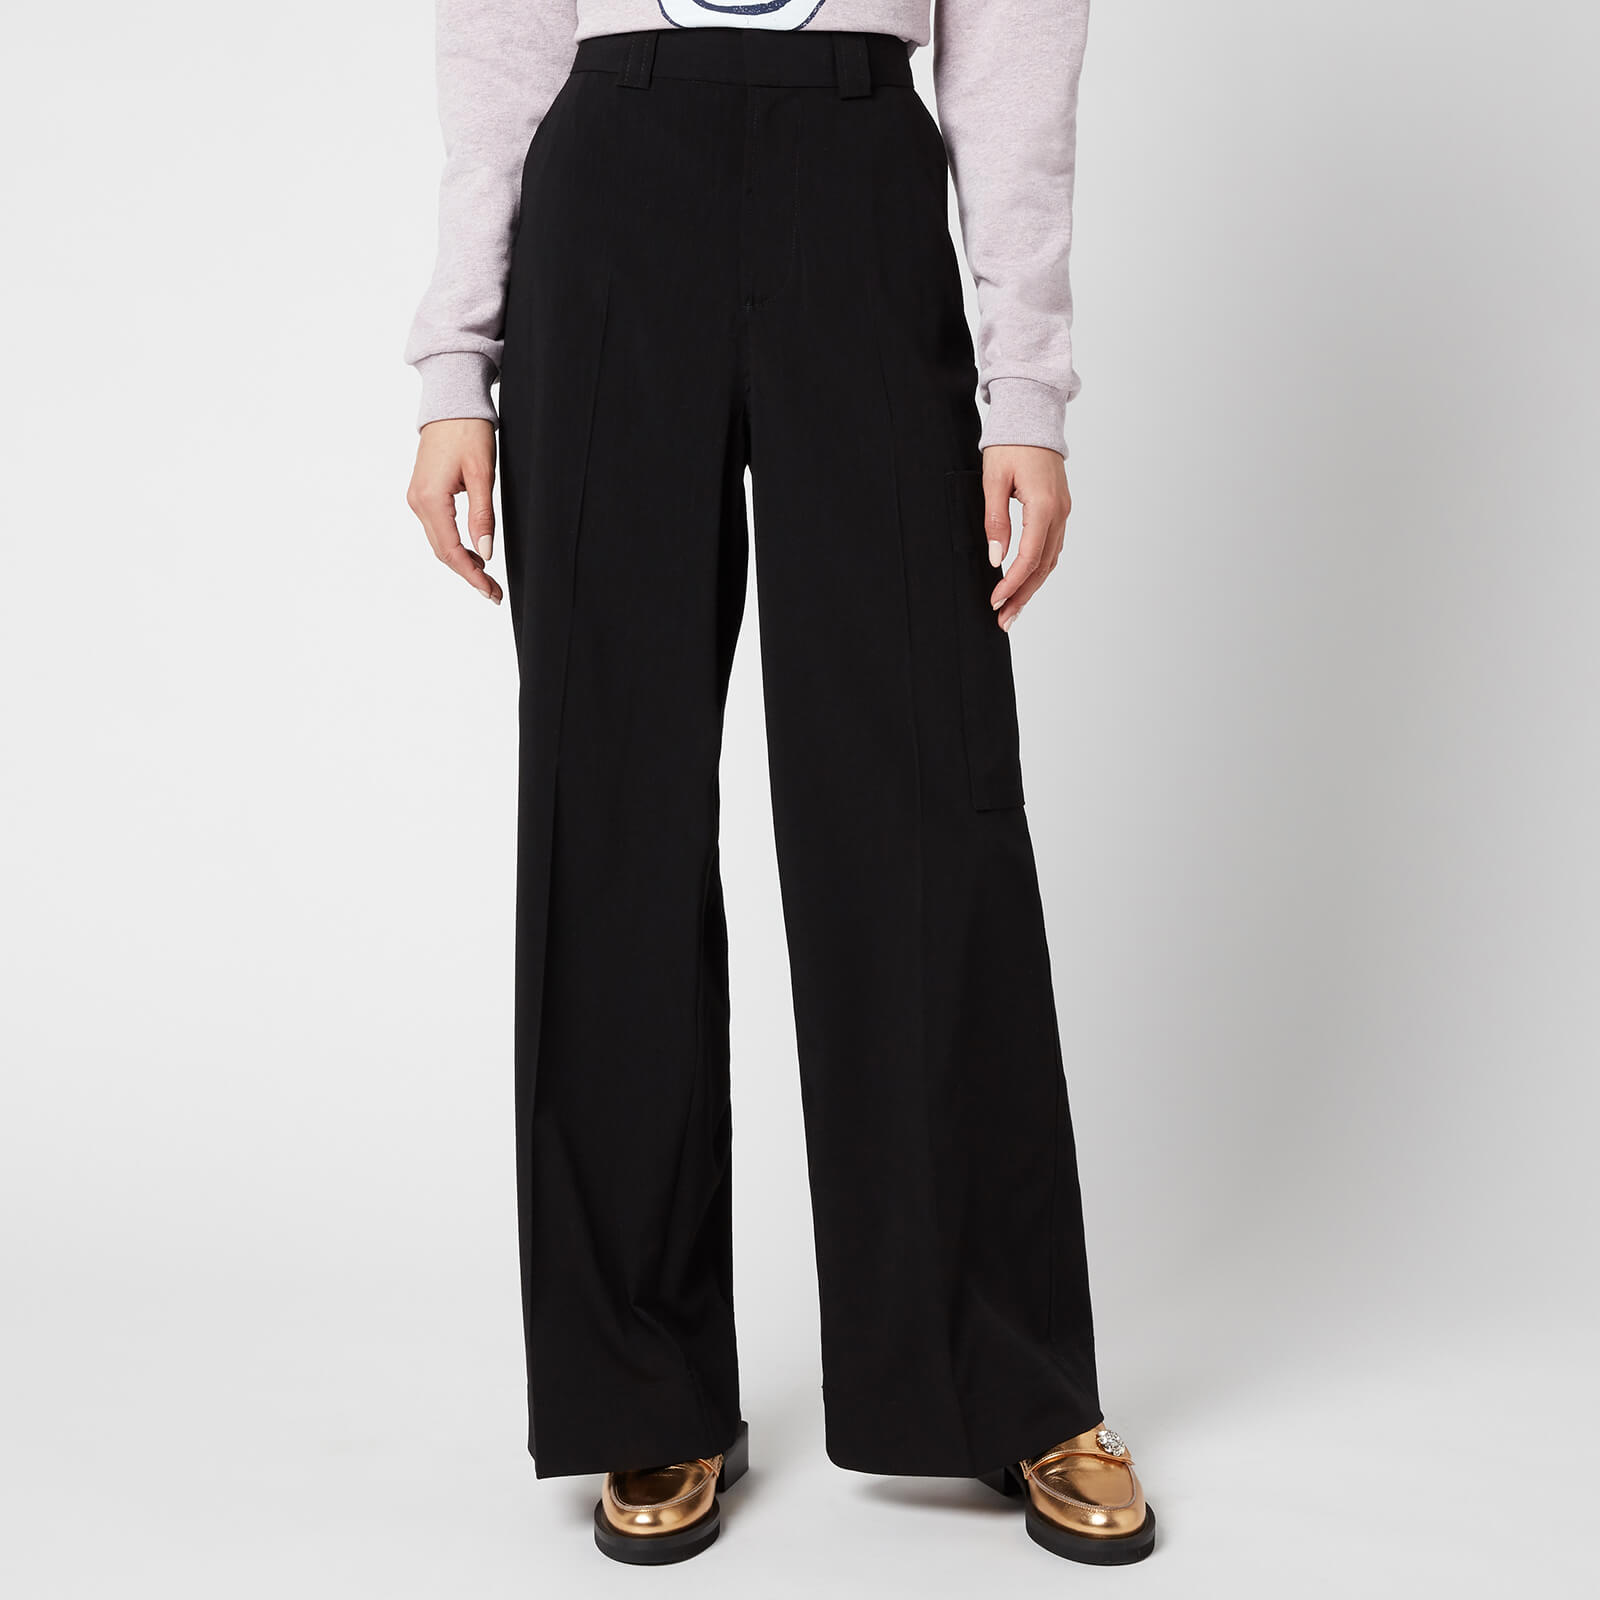 Ganni Women's Melange Suiting Trousers - Black - EU 34/UK 6